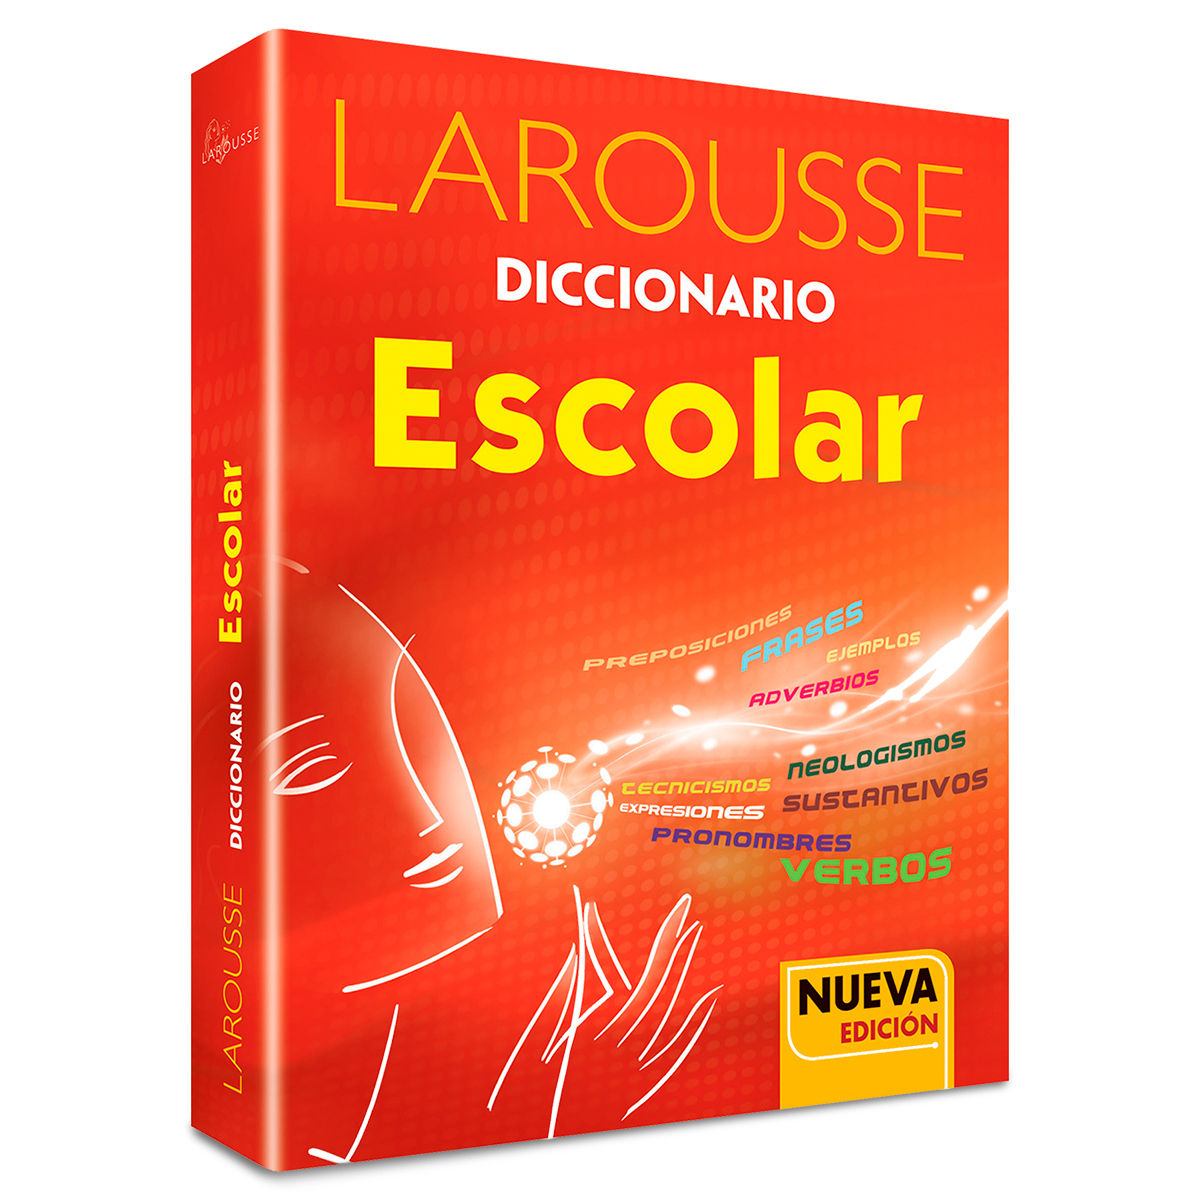 Diccionario Español Larousse Básico